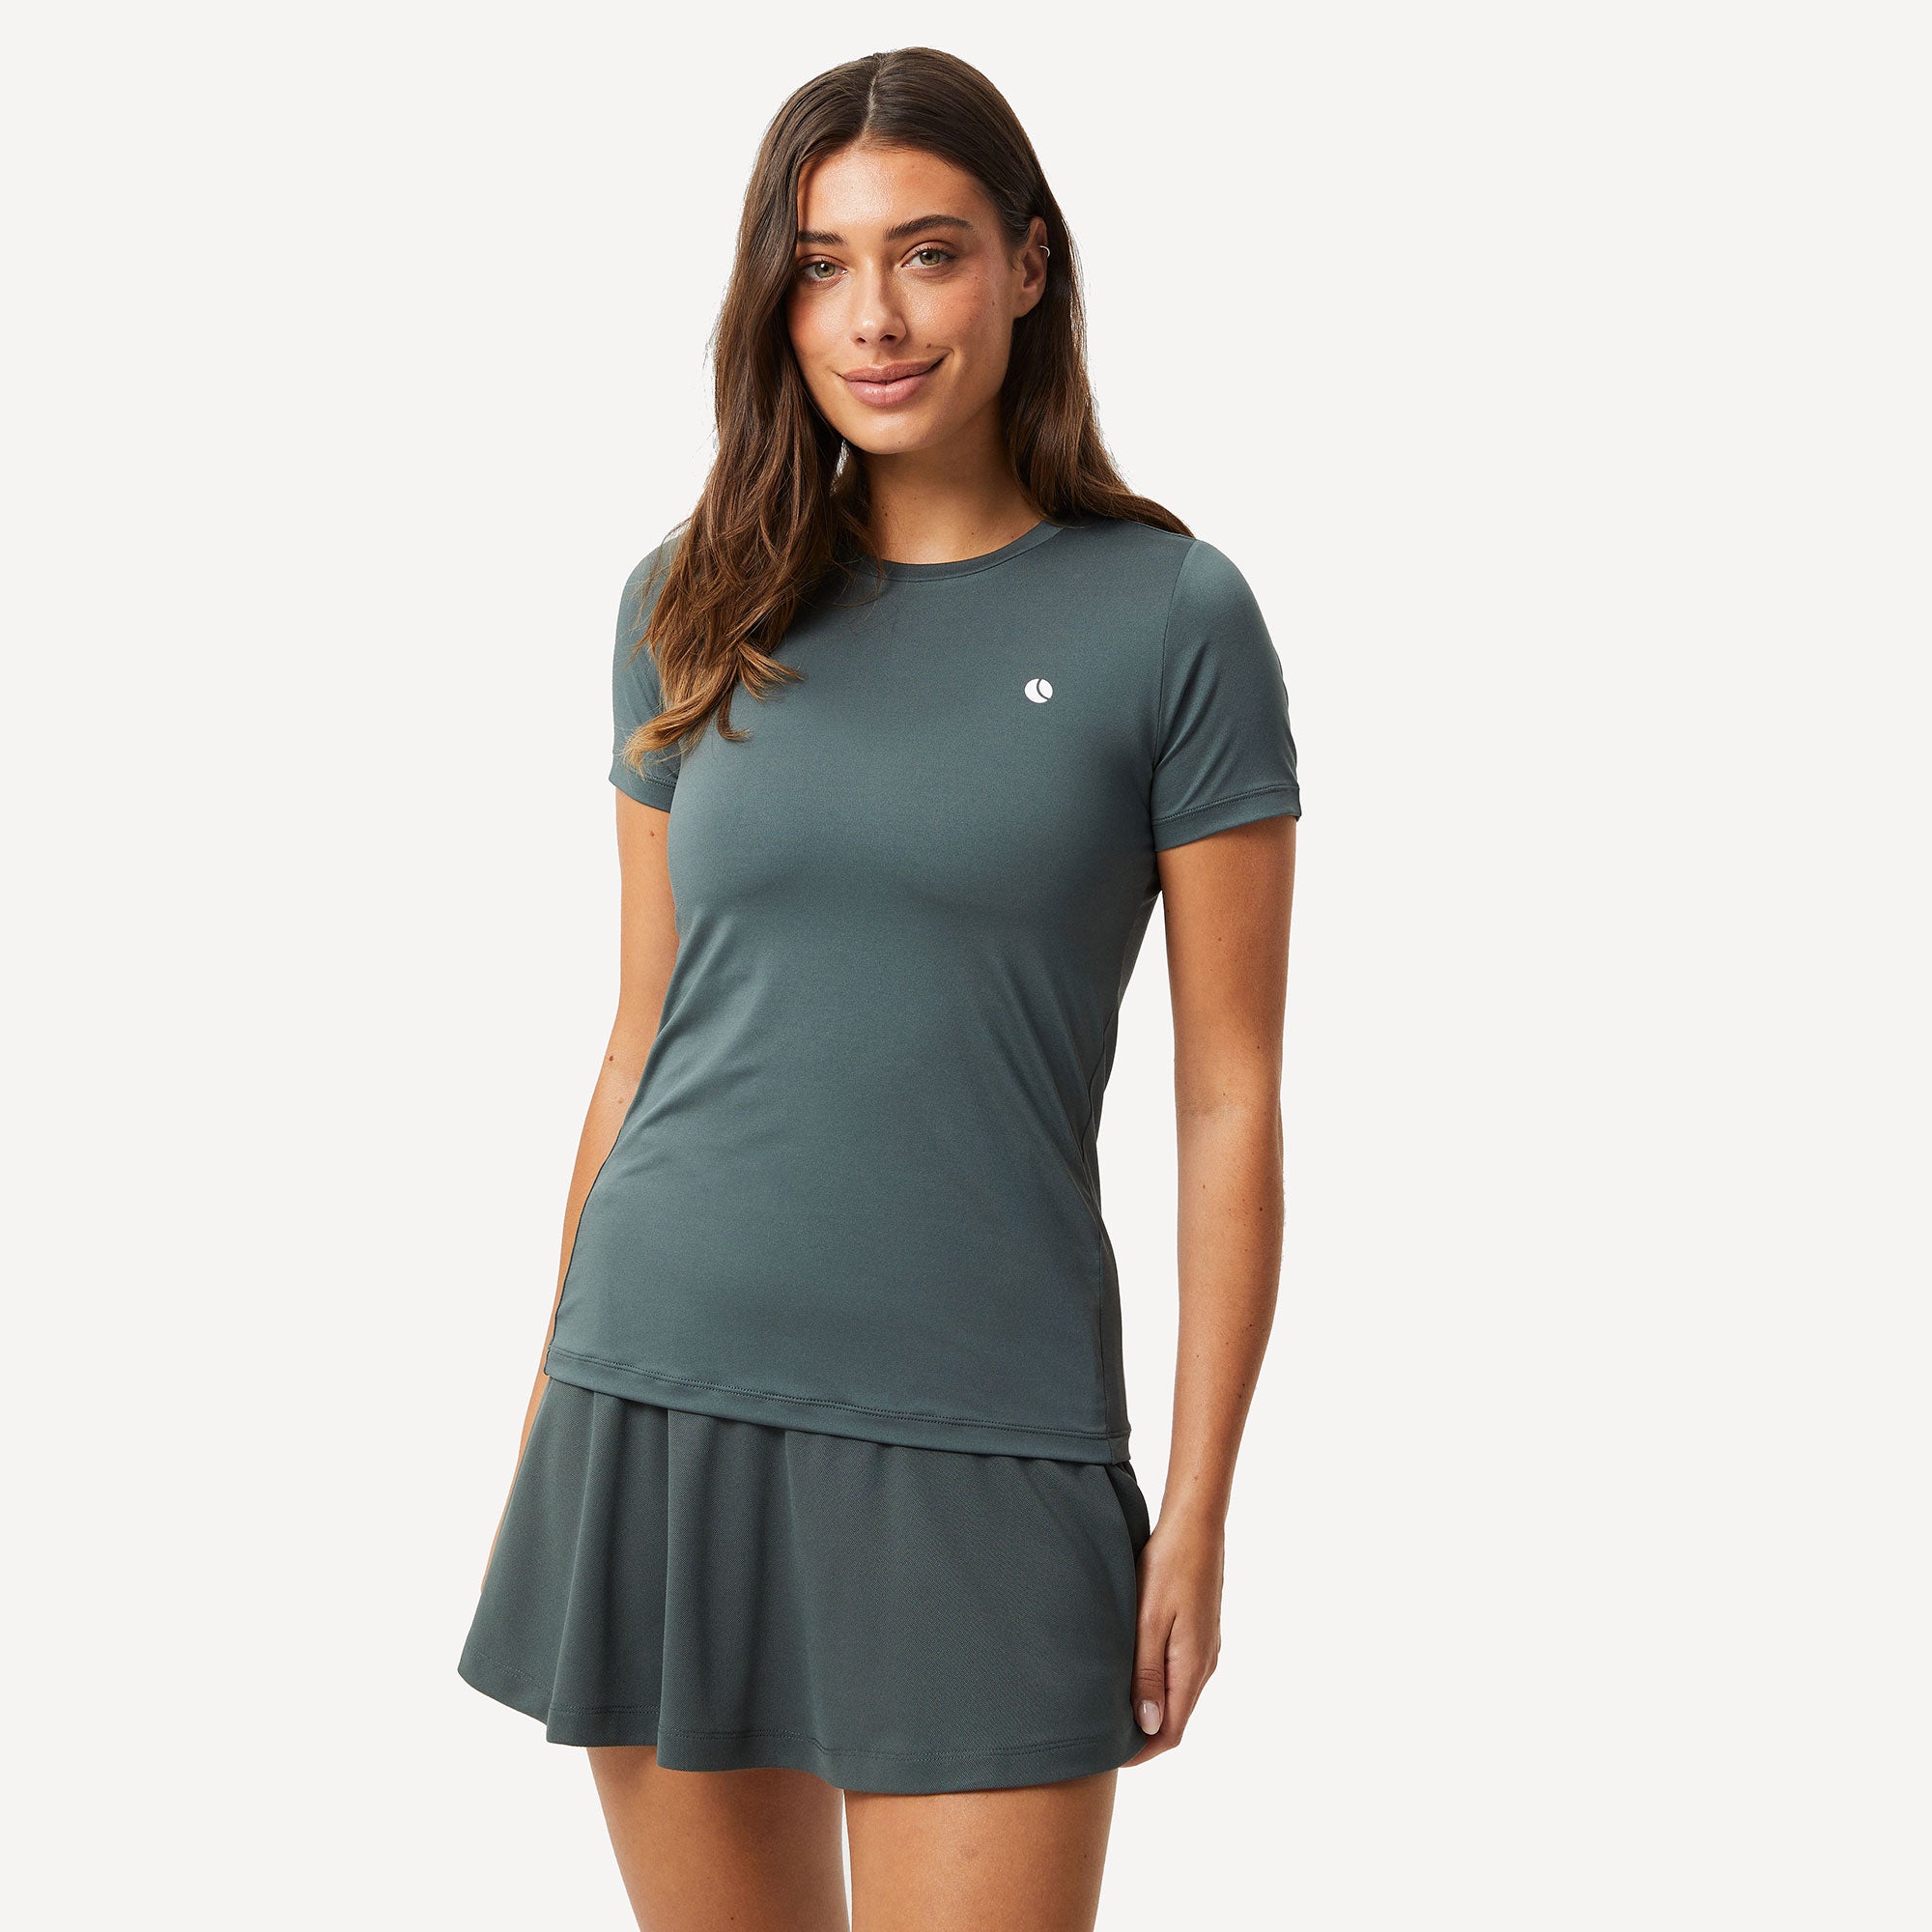 Björn Borg Ace Women's Slim Tennis Shirt - Green (1)